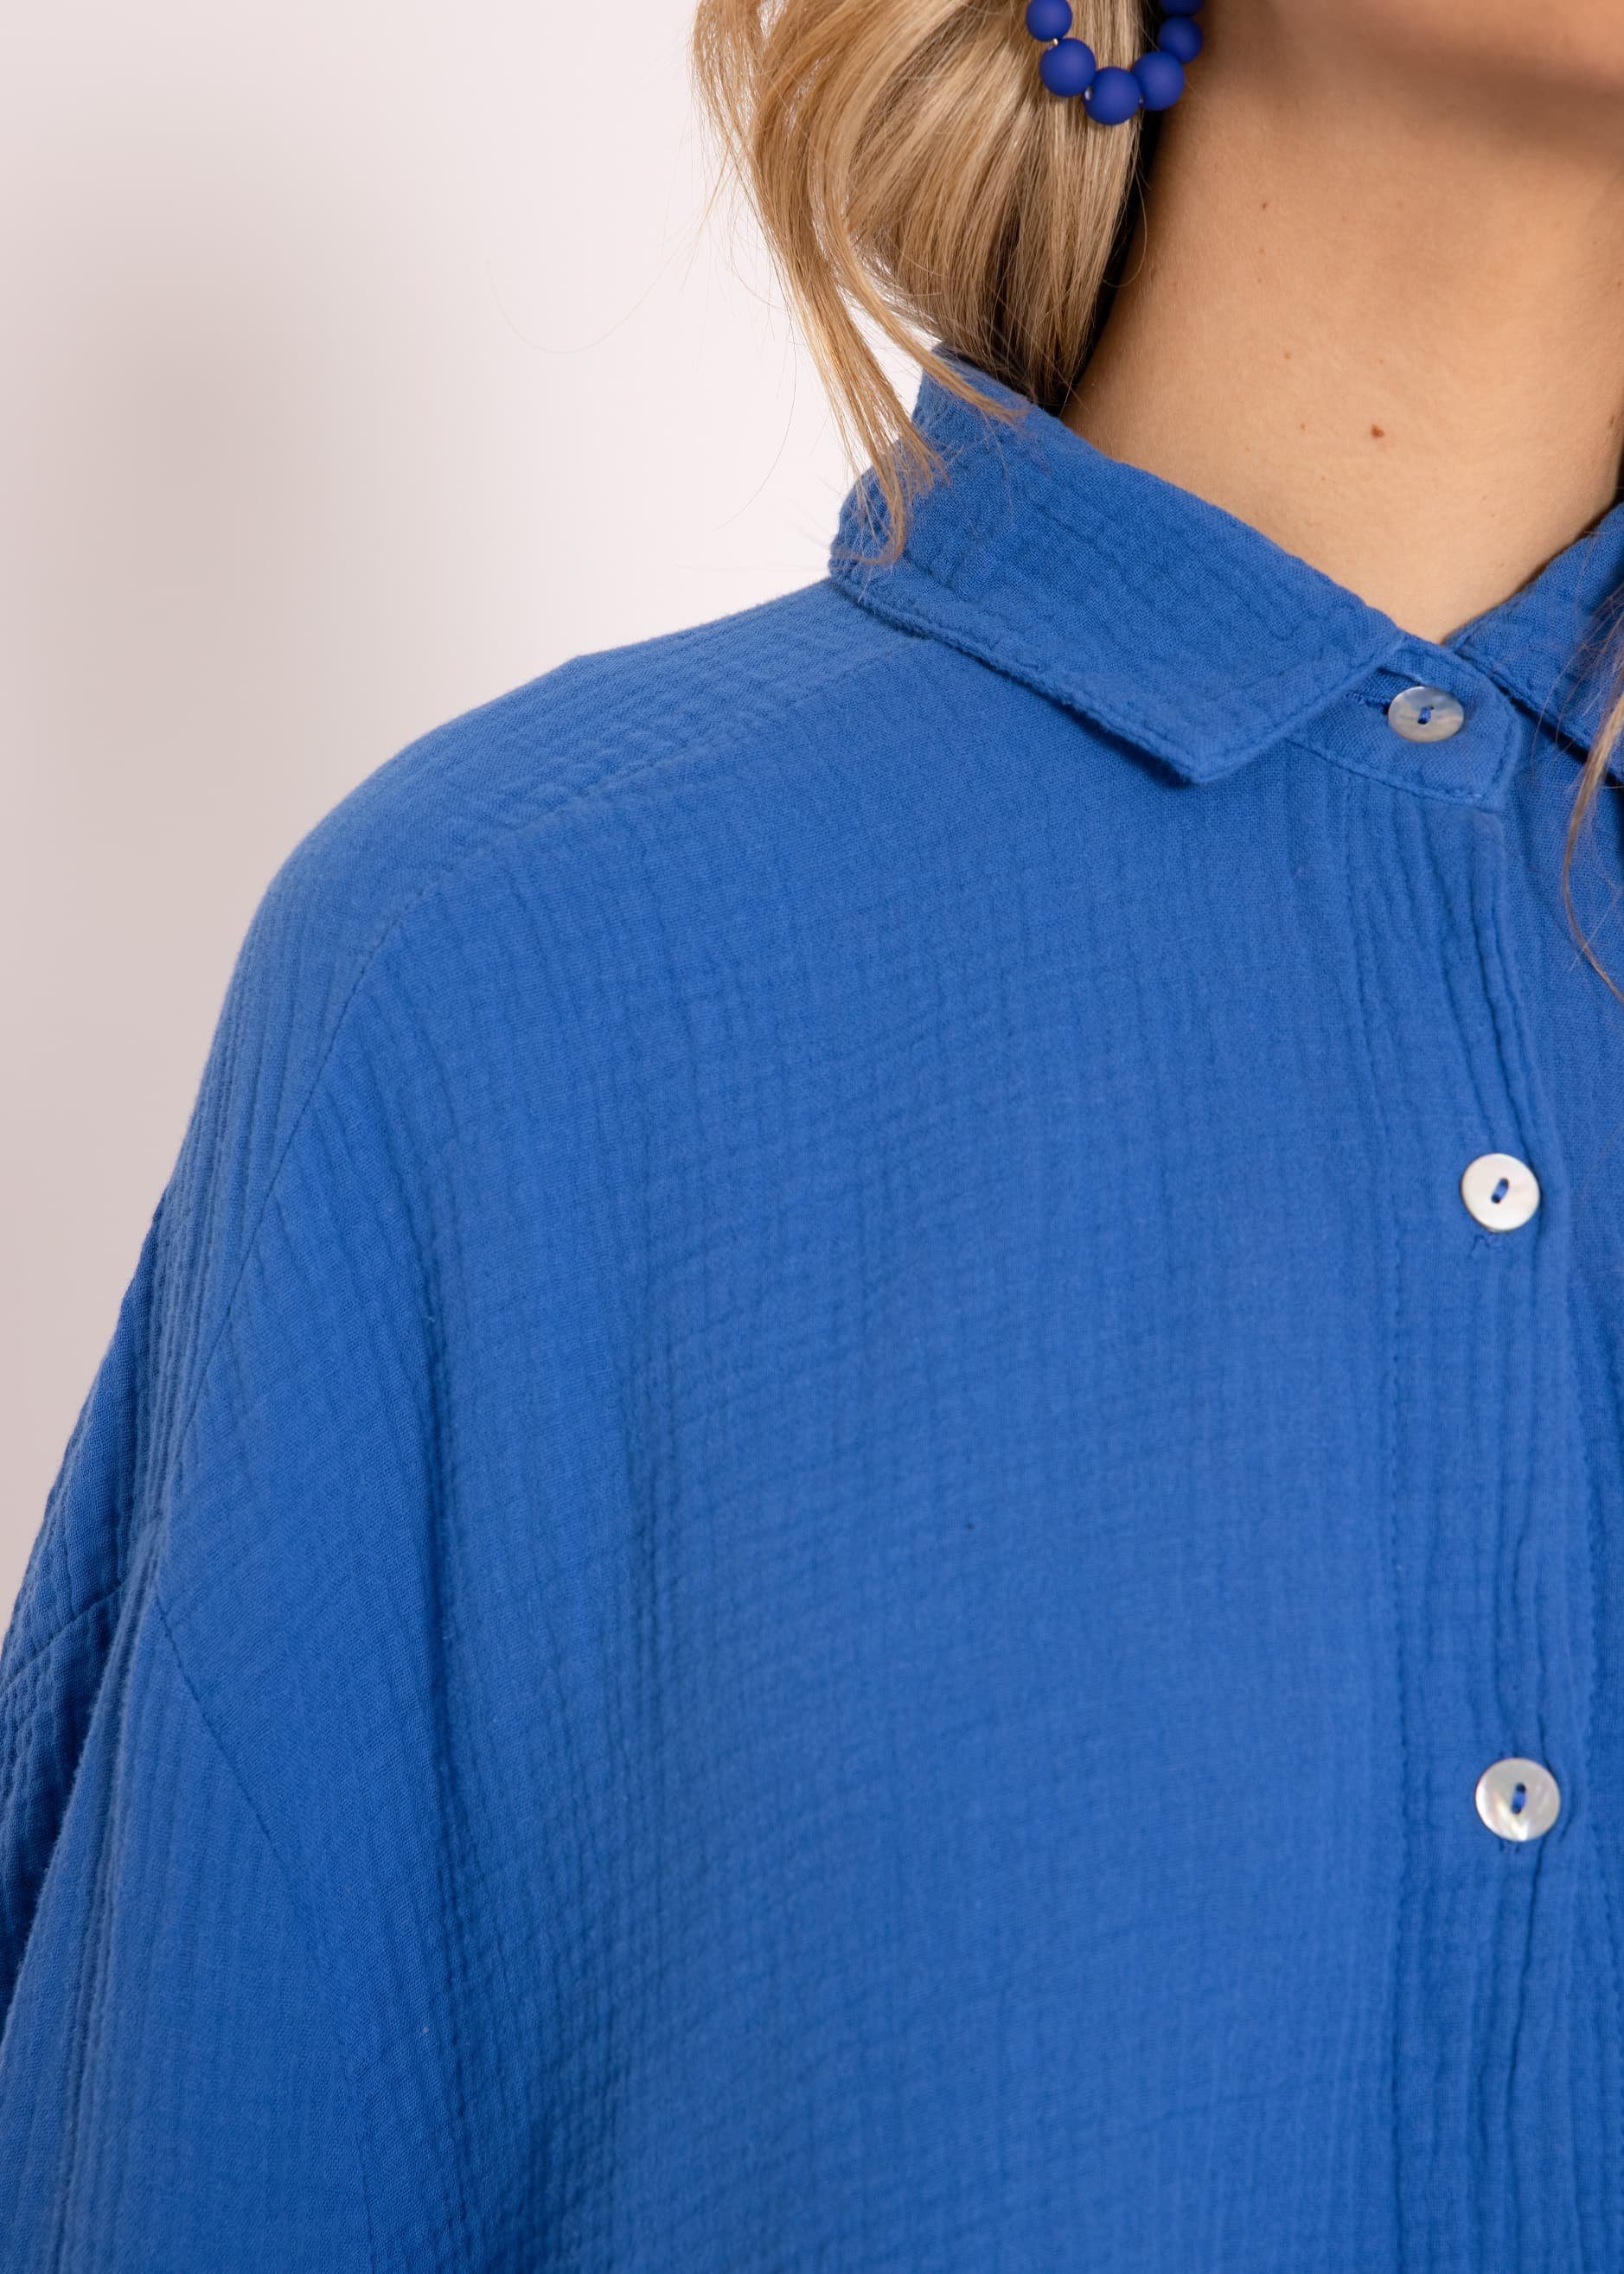 Longbluse mit Damen Musselin SASSYCLASSY Royalblau 36-48) Langarm Oversize aus Baumwolle One (Gr. Bluse Size V-Ausschnitt, lang Hemdbluse